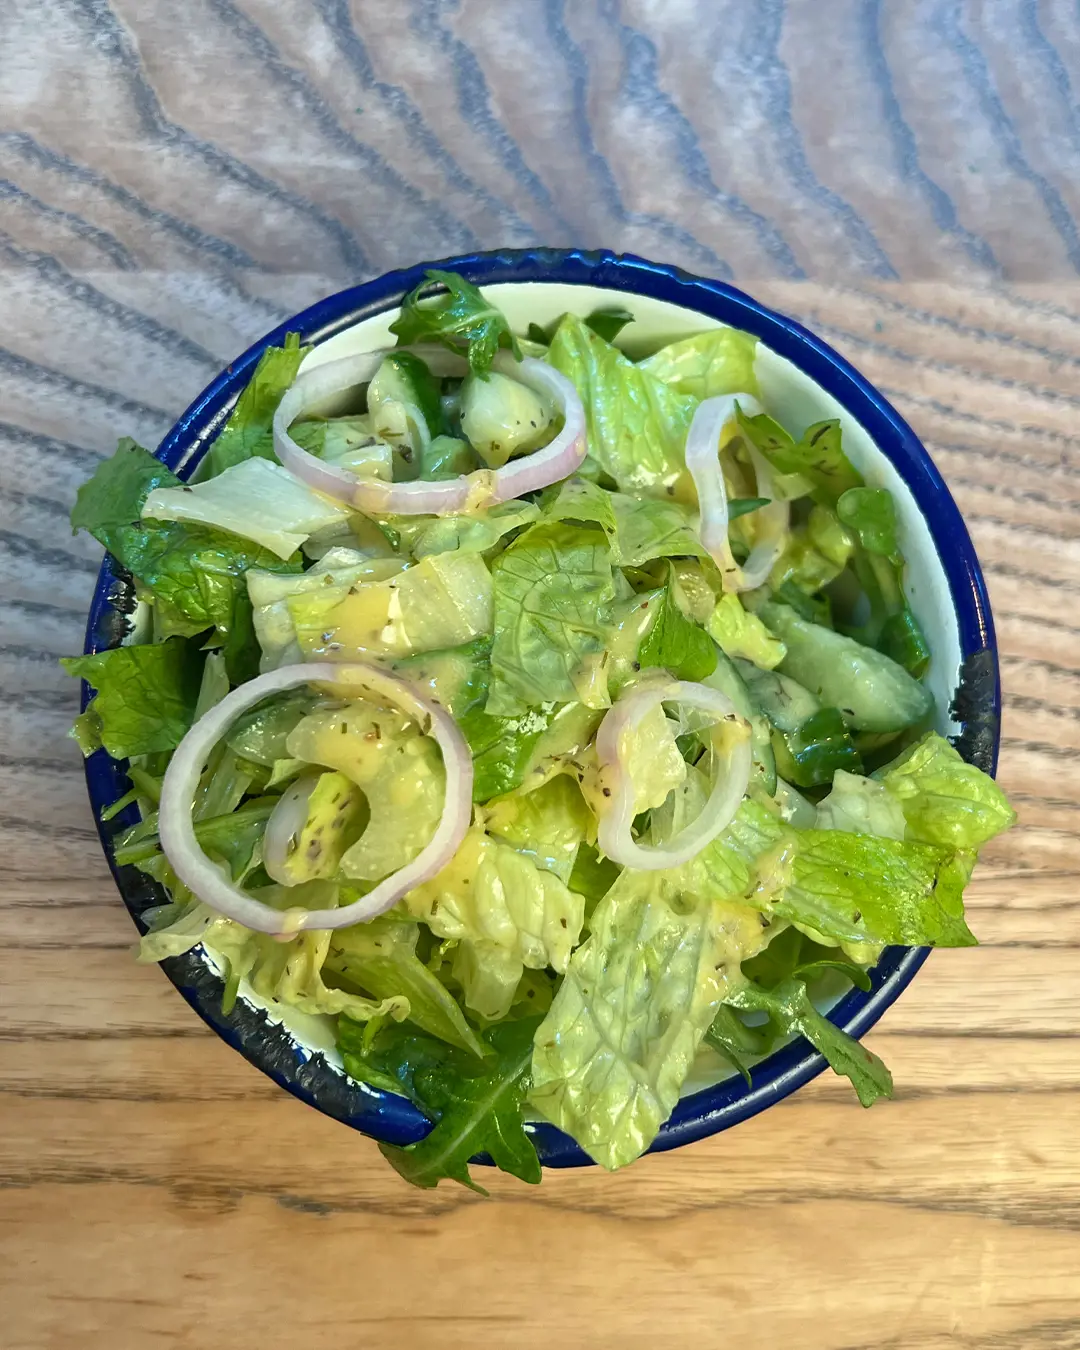 Dressed Green salad